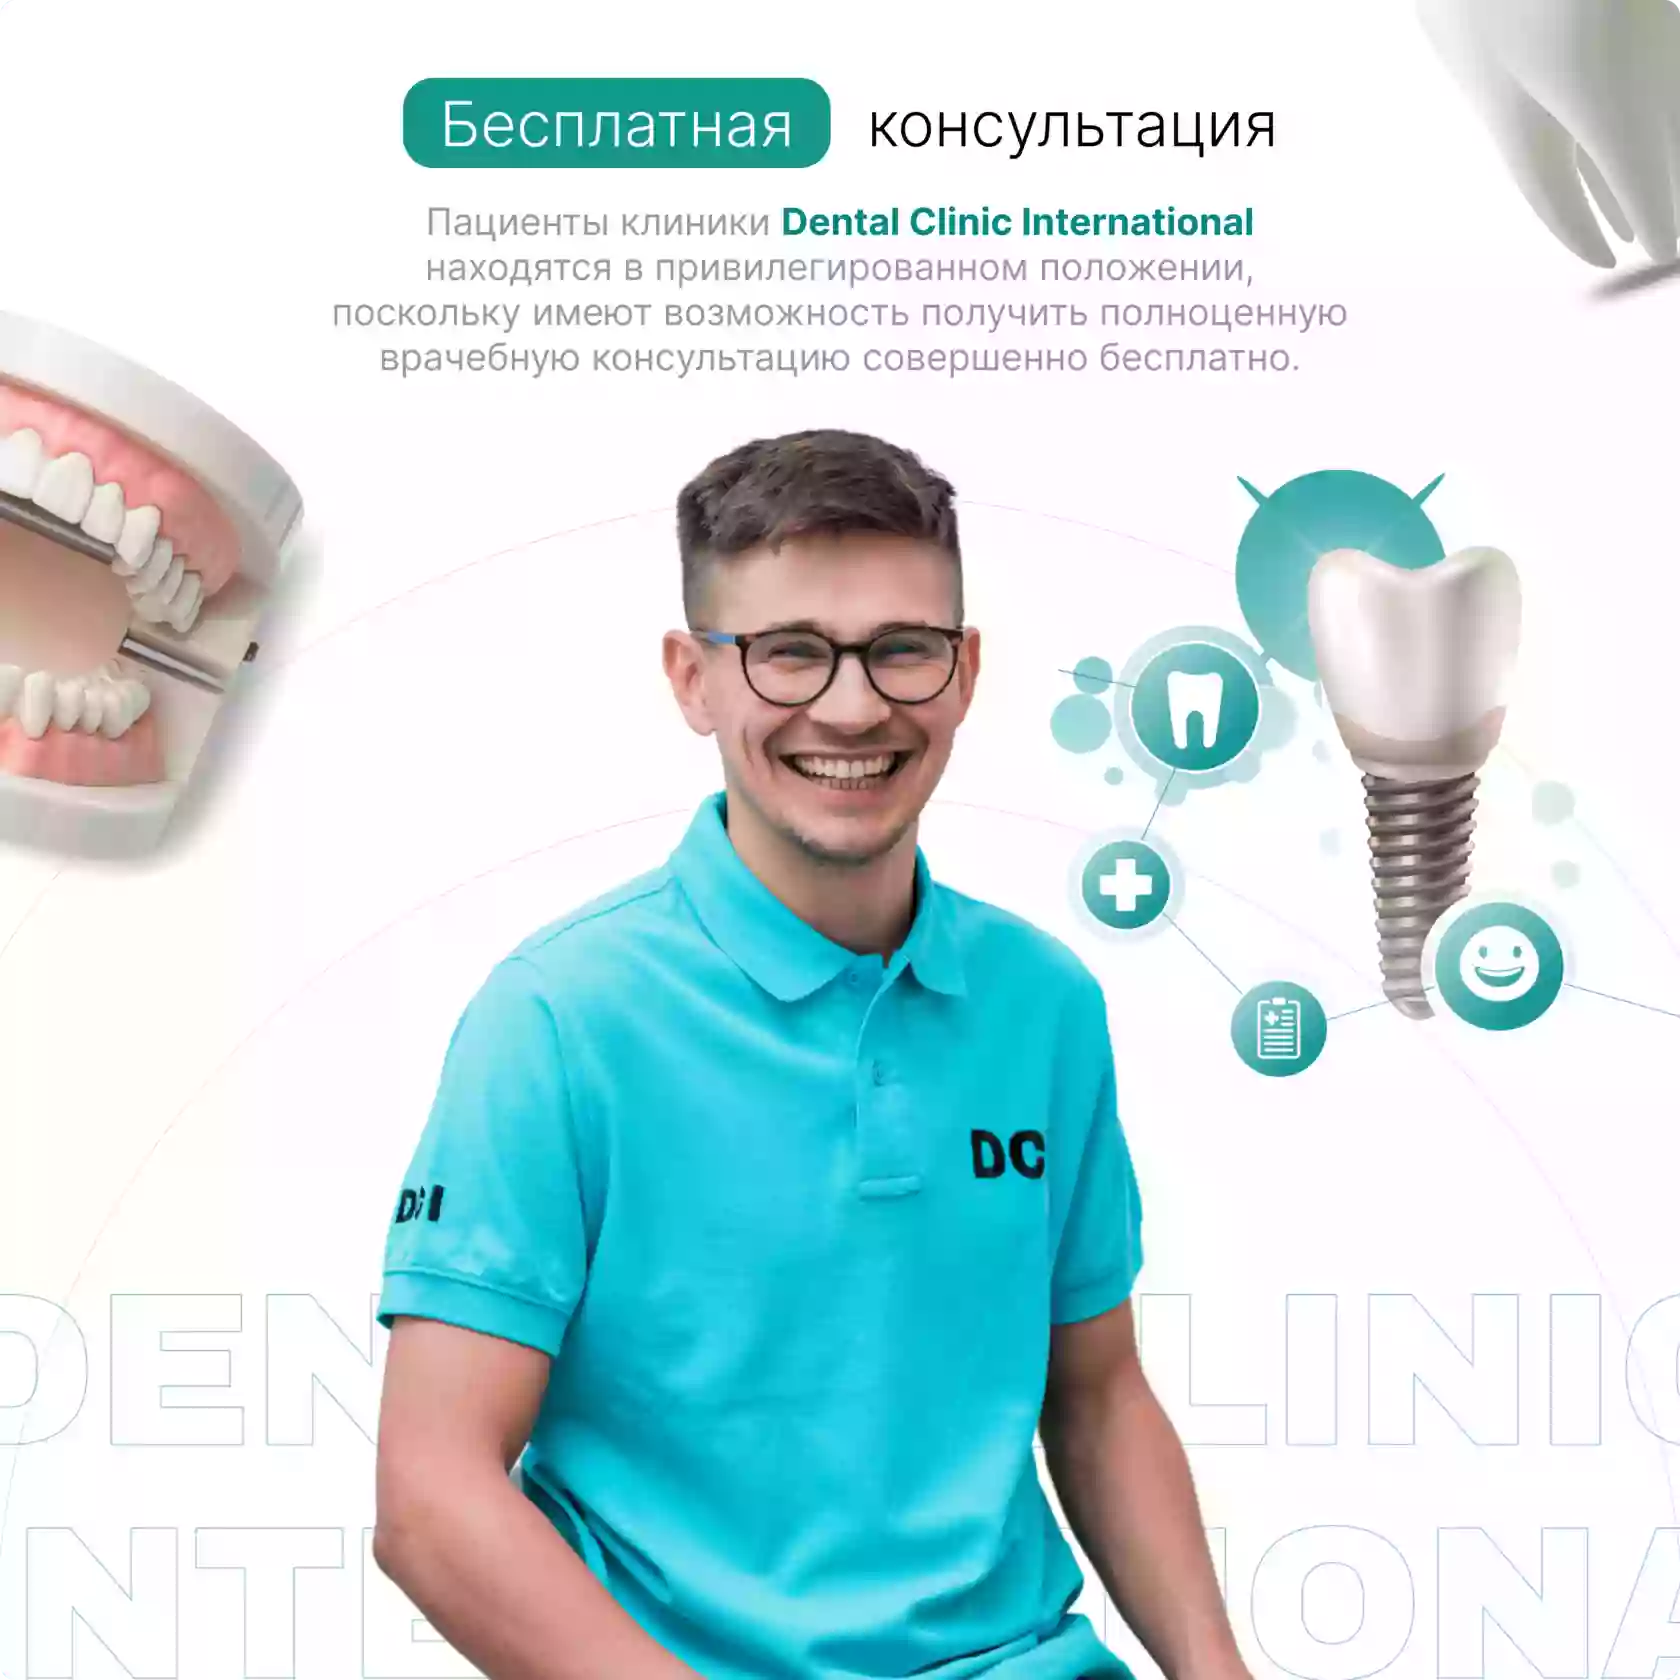 Dental Clinic International